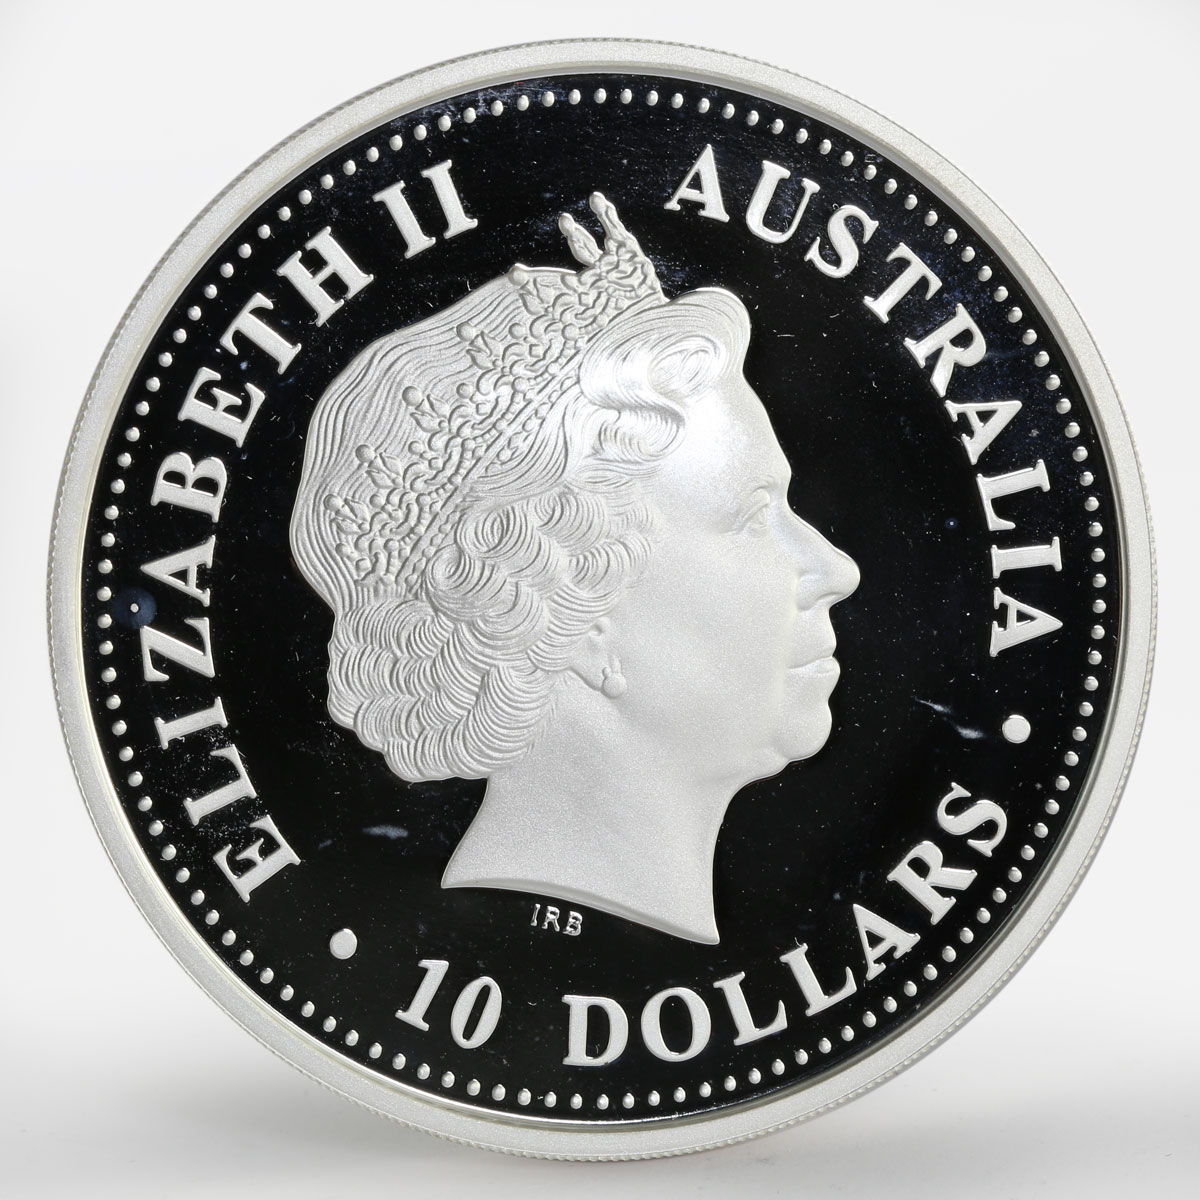 Australia 10 dollars Kookaburra Evolution of the Calendar silver proof coin 2001